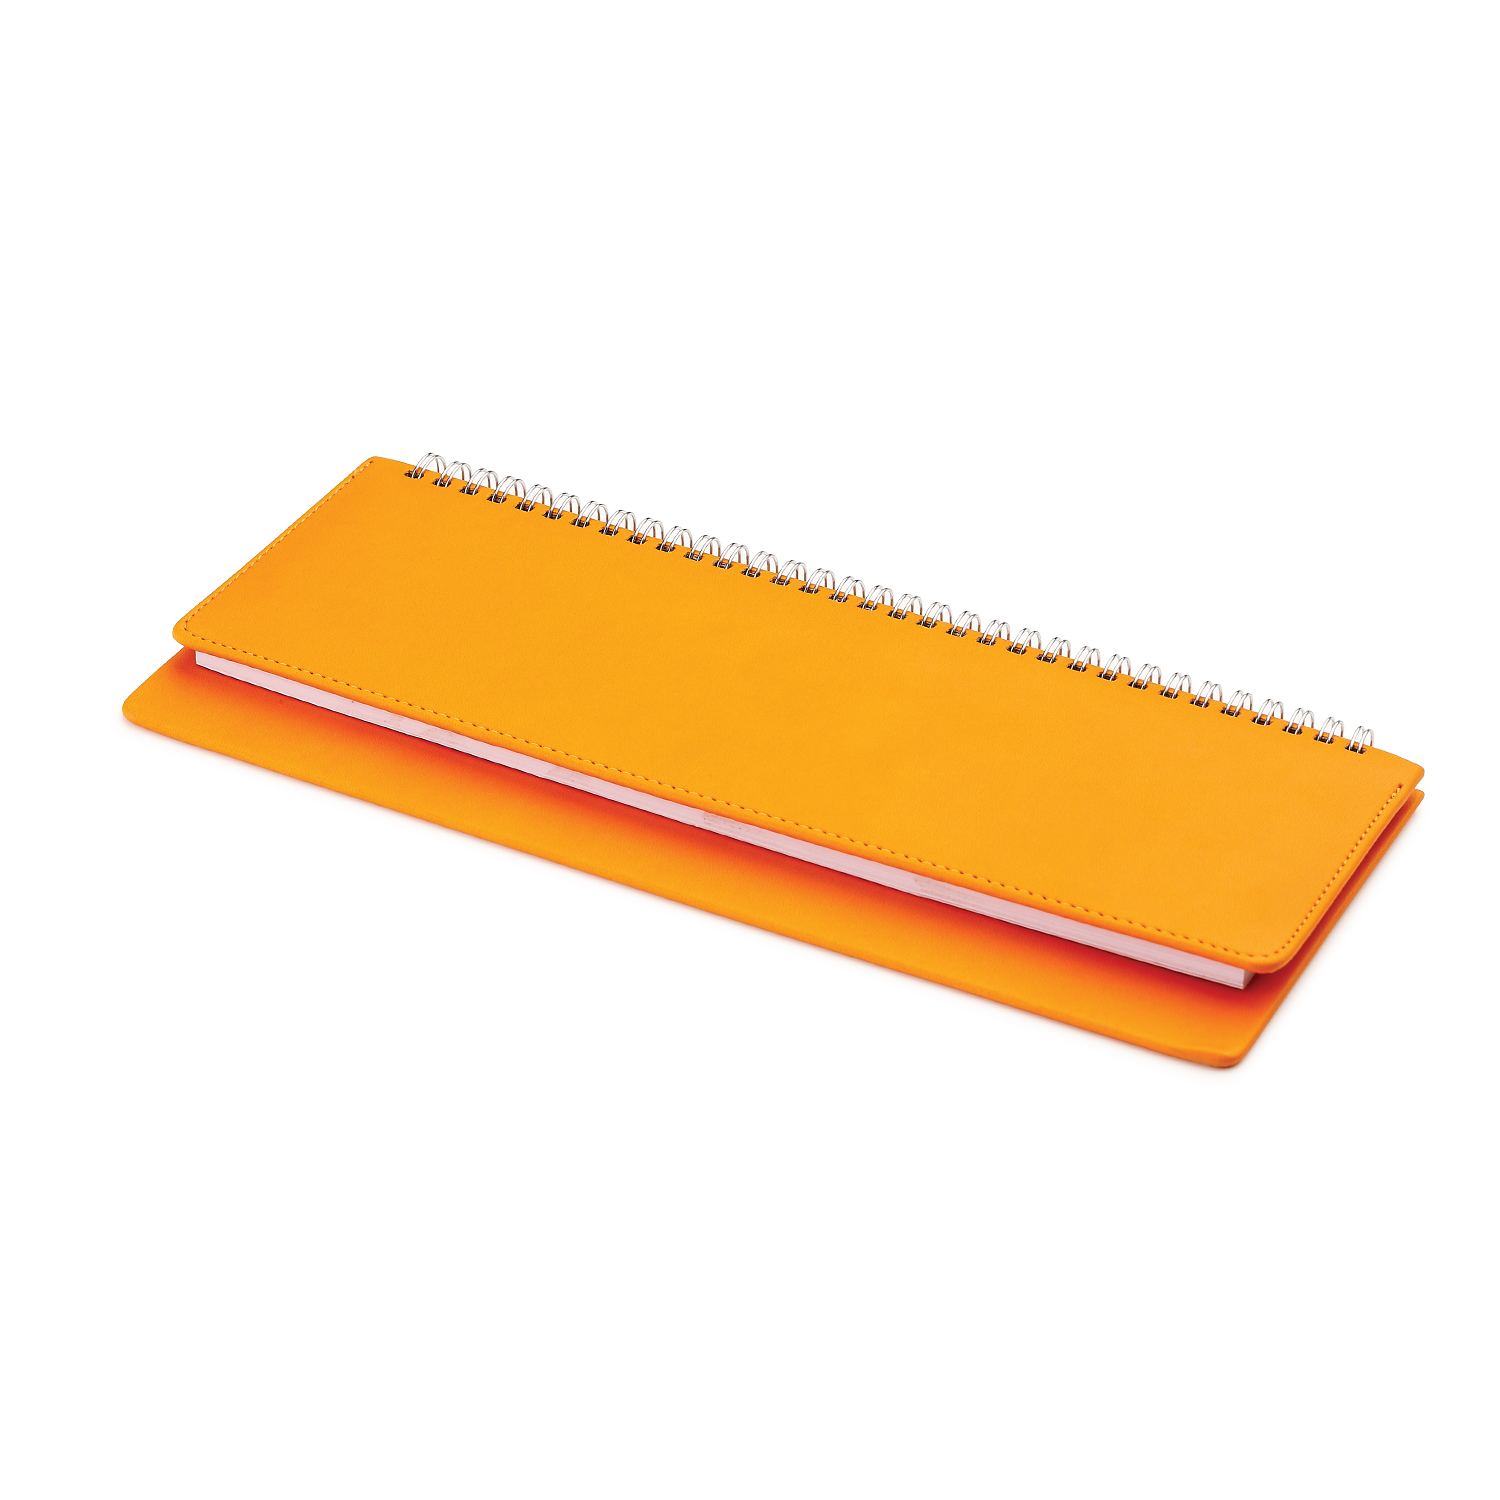 Планинг датированный, Velvet, оранжевый, 305х130 мм, белый блок, открытый гребень